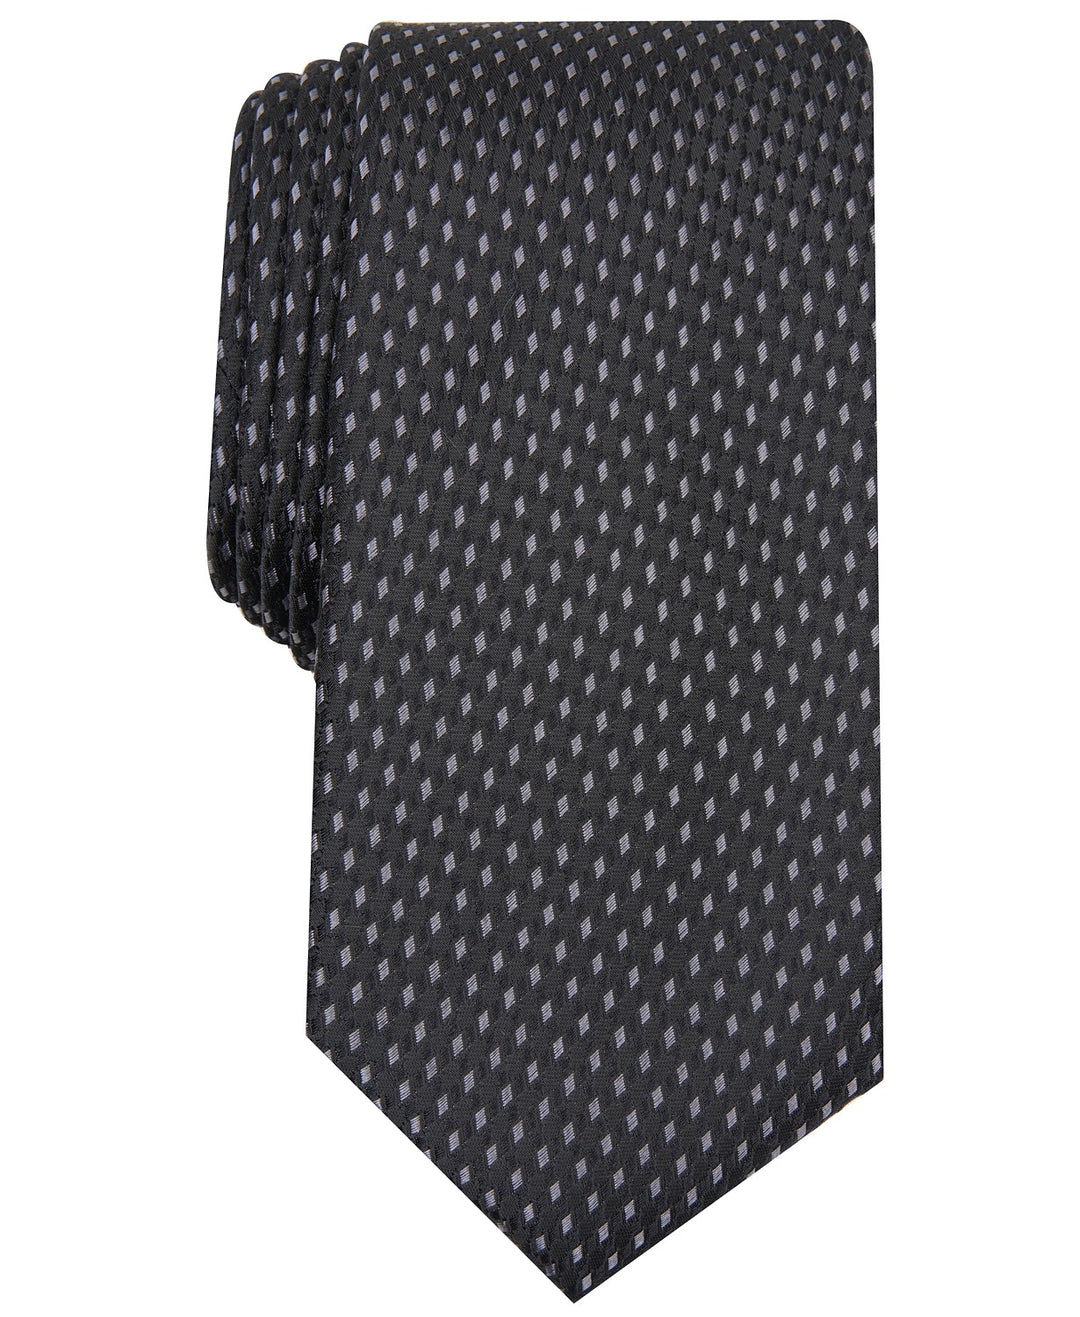 Alfani Men's Slim Neat Tie Black Diamond Size Regular